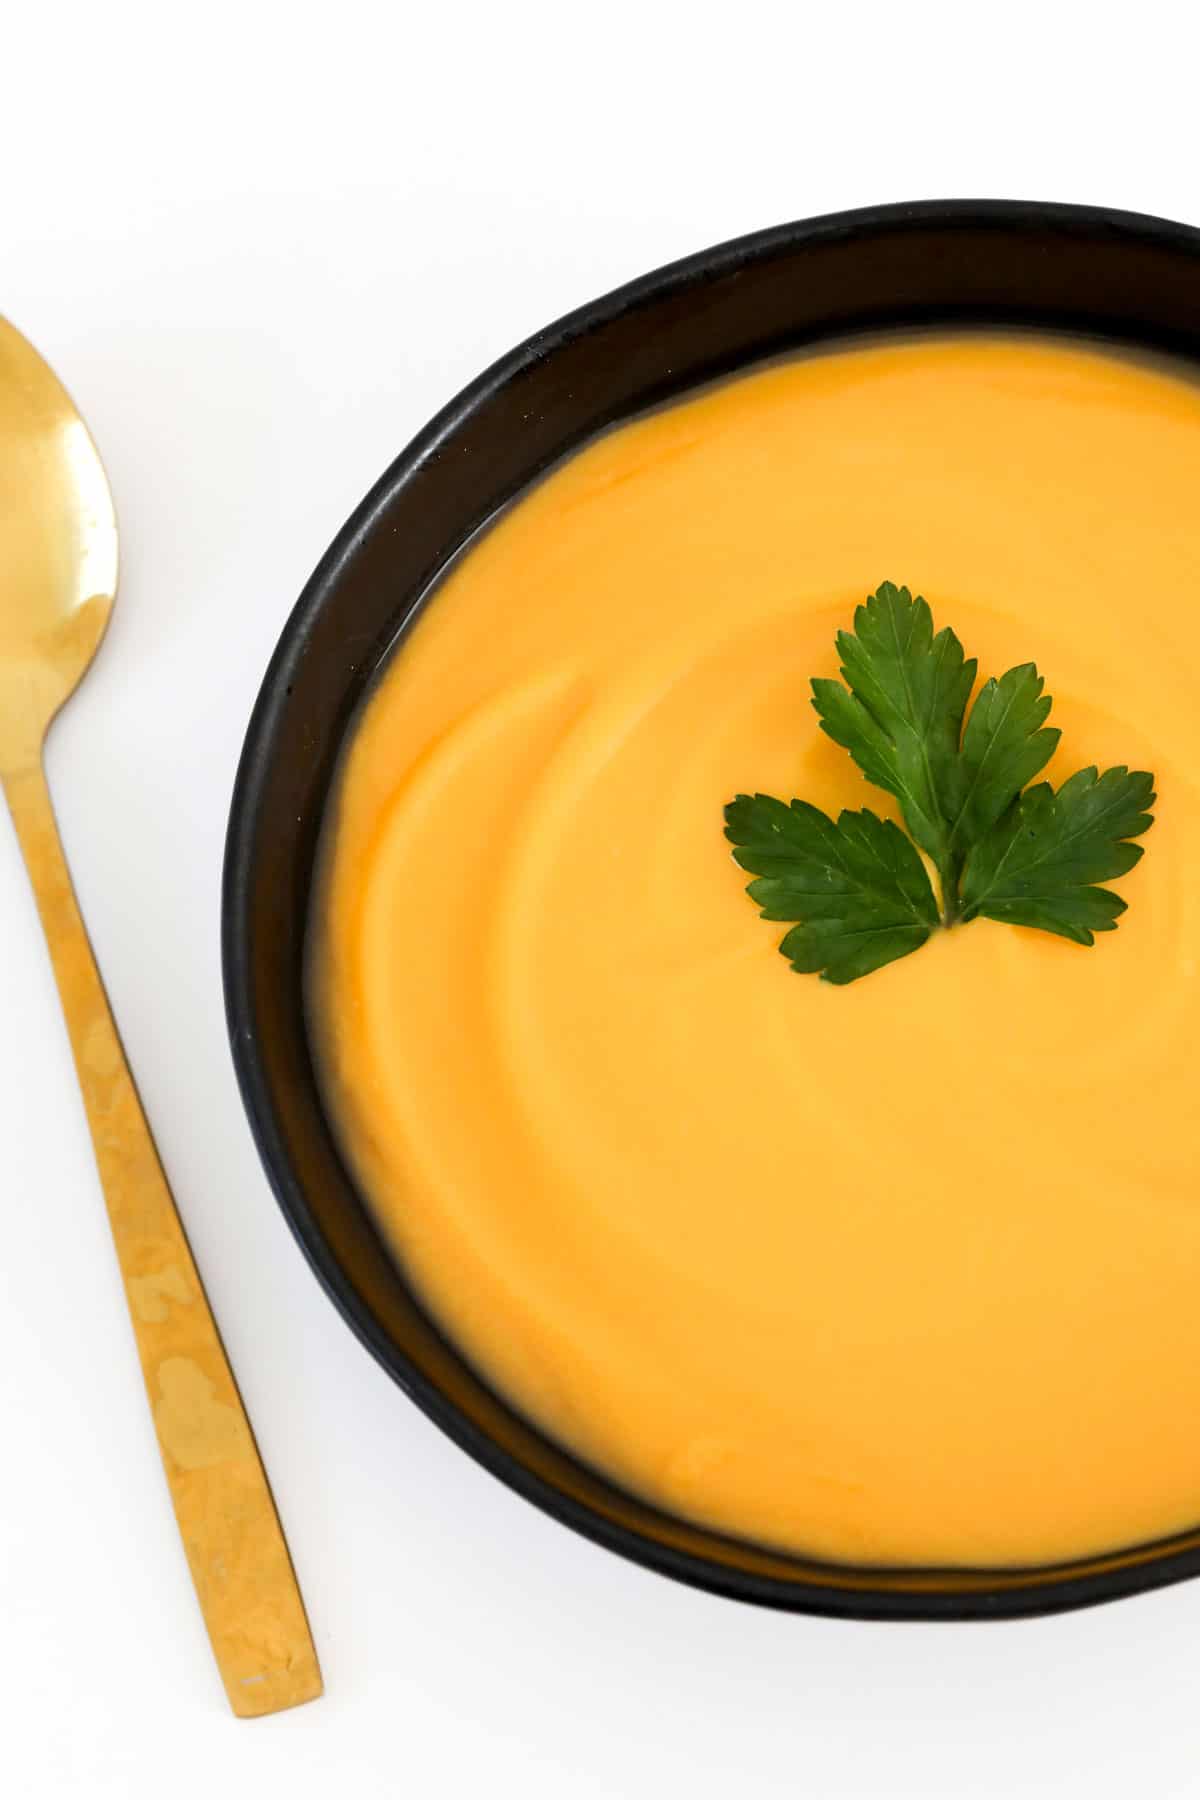 A bowl of creamy yellow soup.